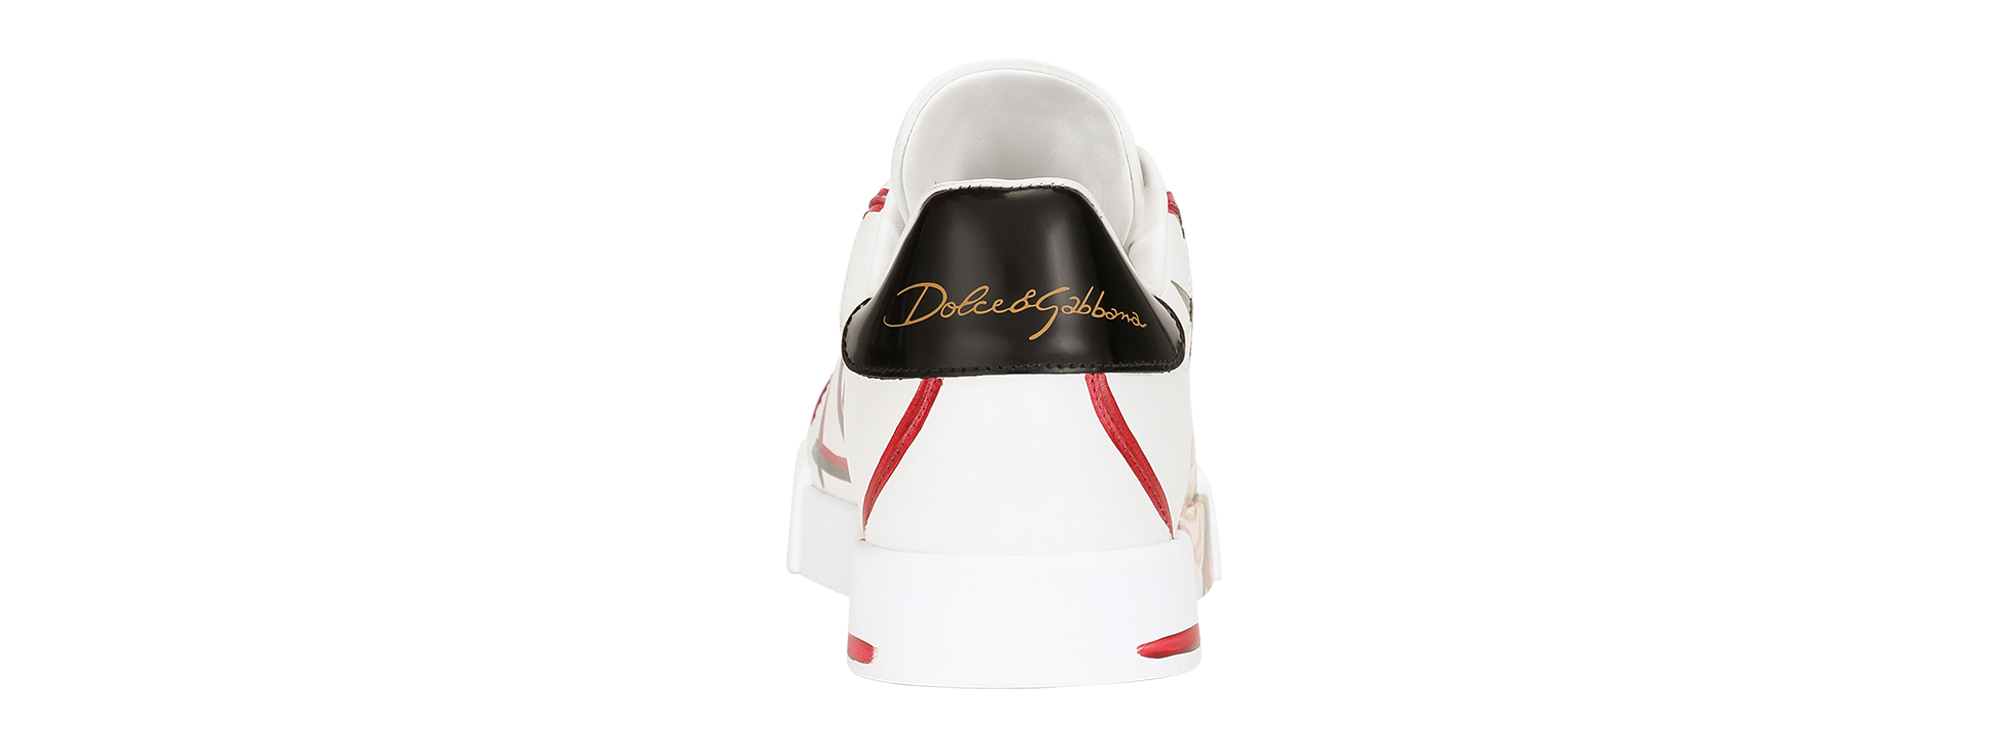 Dolce & Gabbana LIMITED EDITION APRILE 2021  4